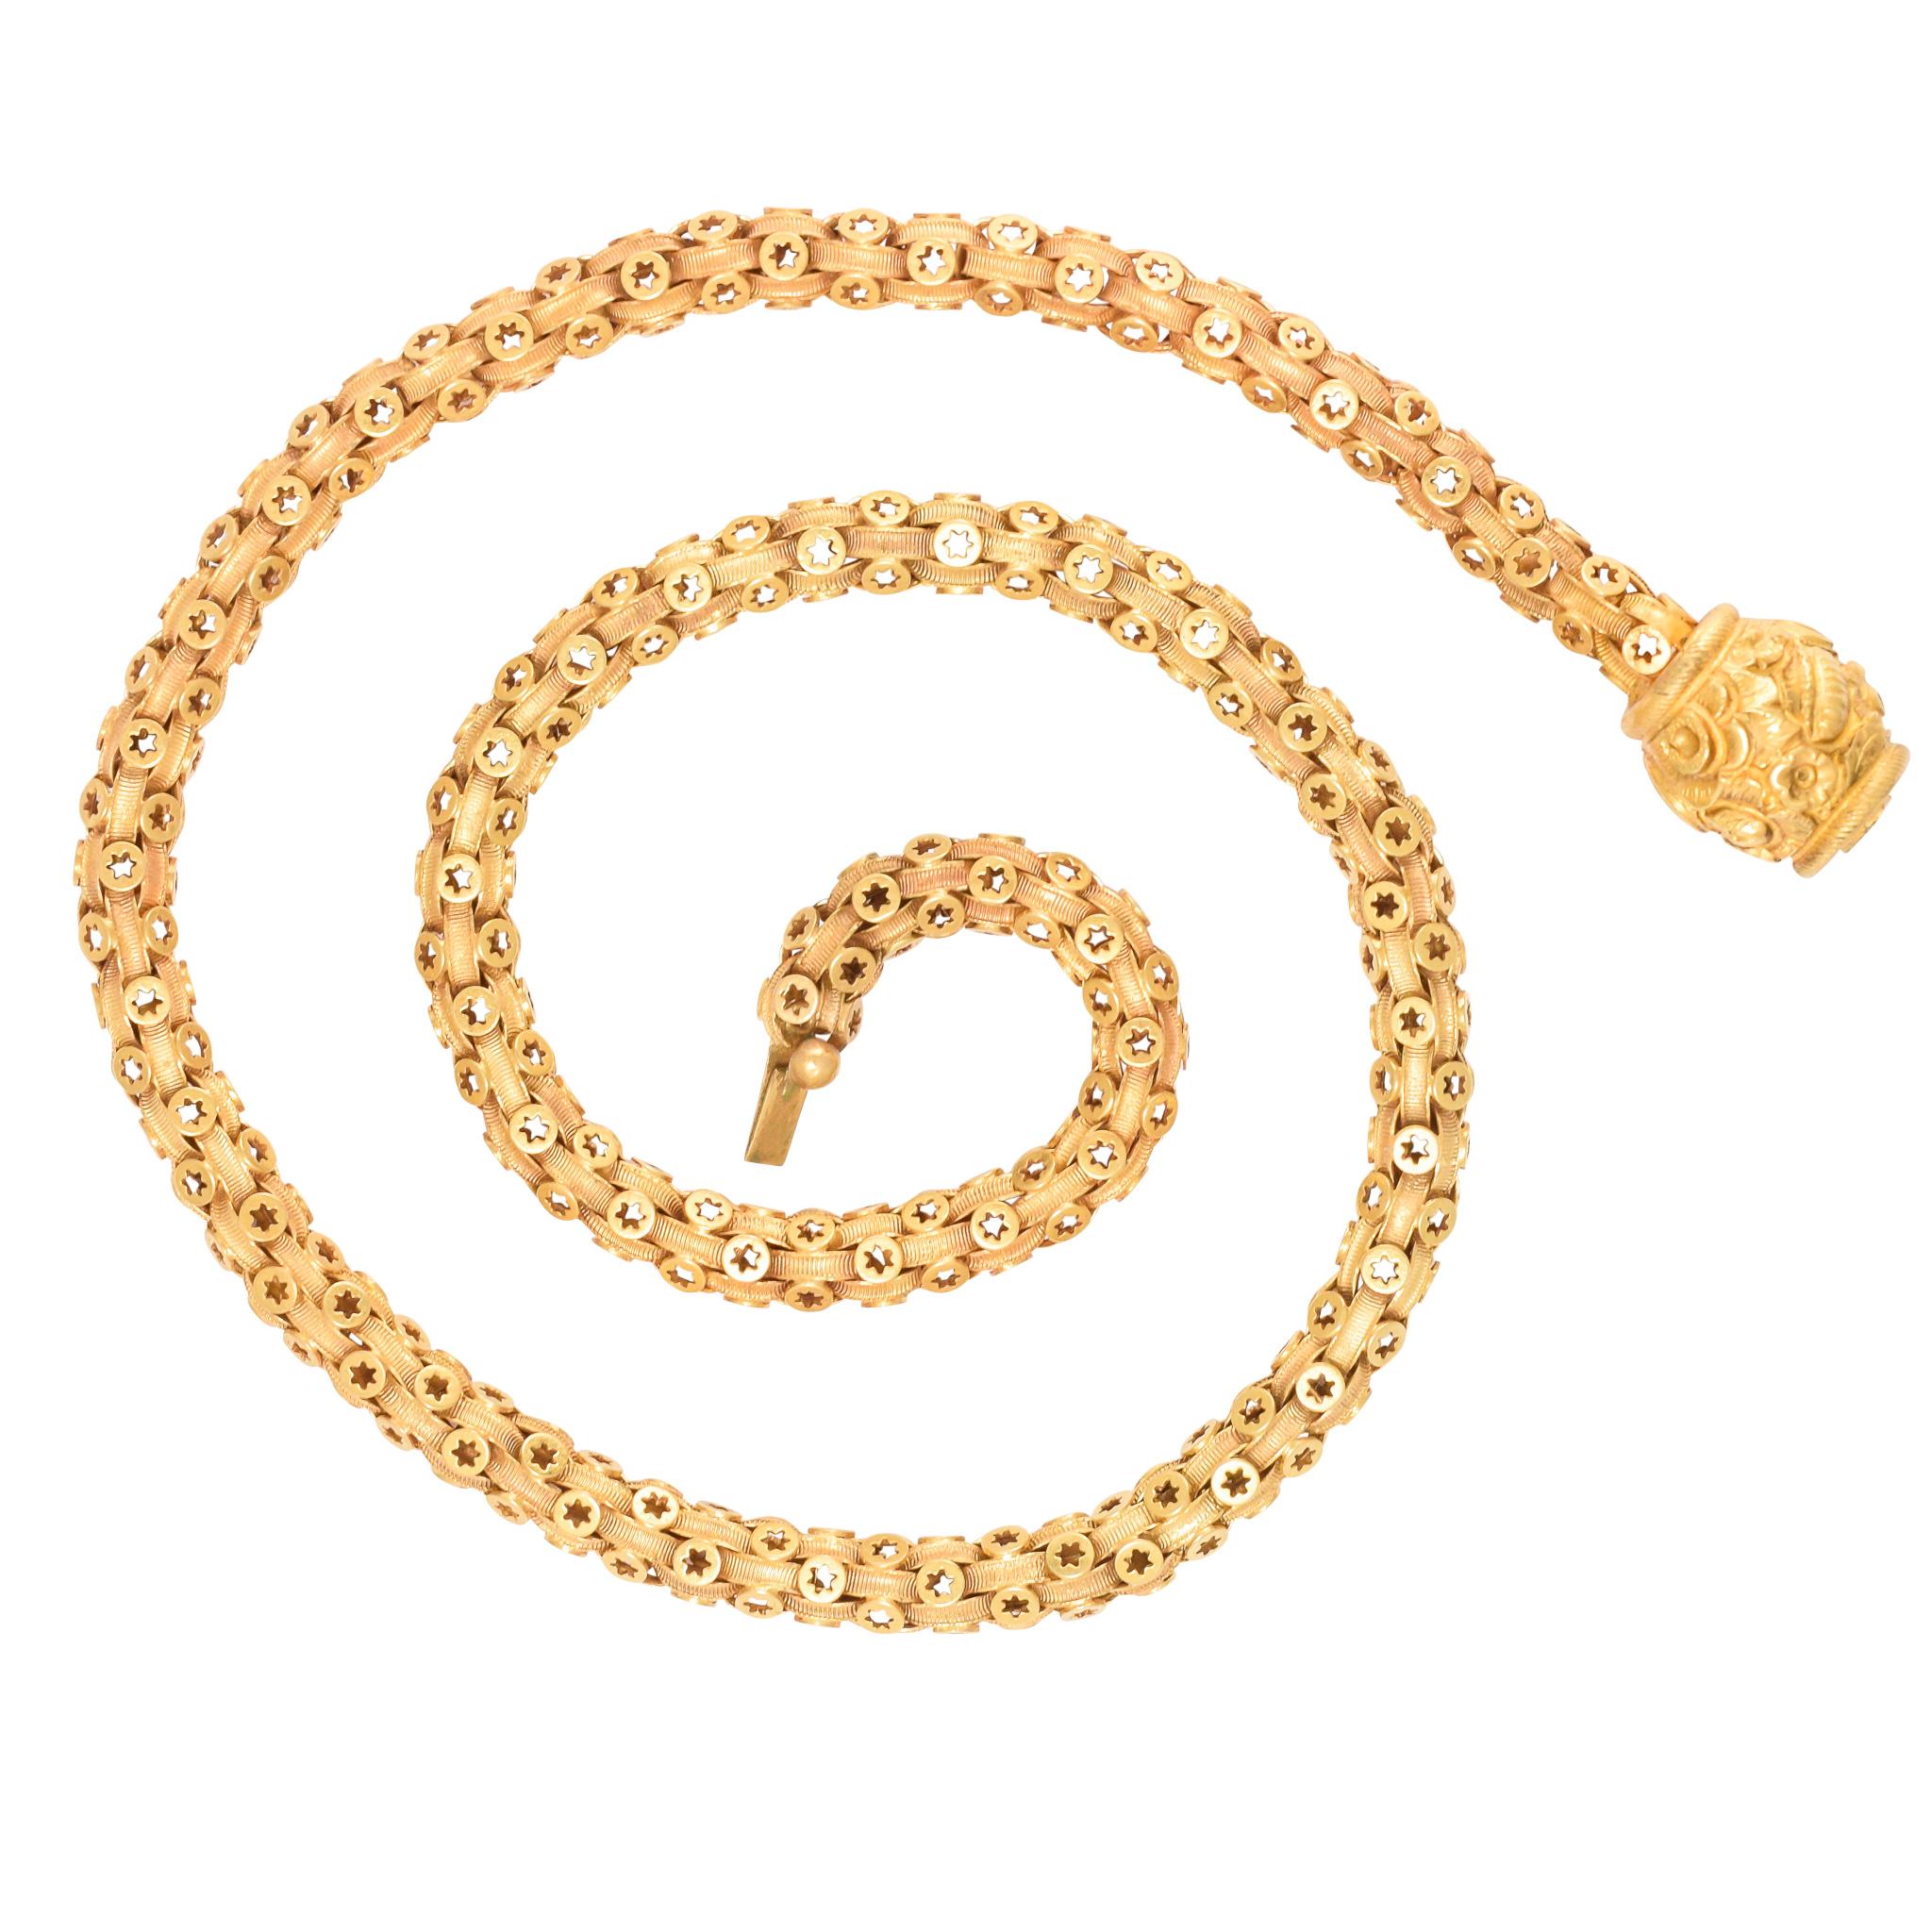 Antique Georgian 15 Karat Gold Star-Link Chain Necklace